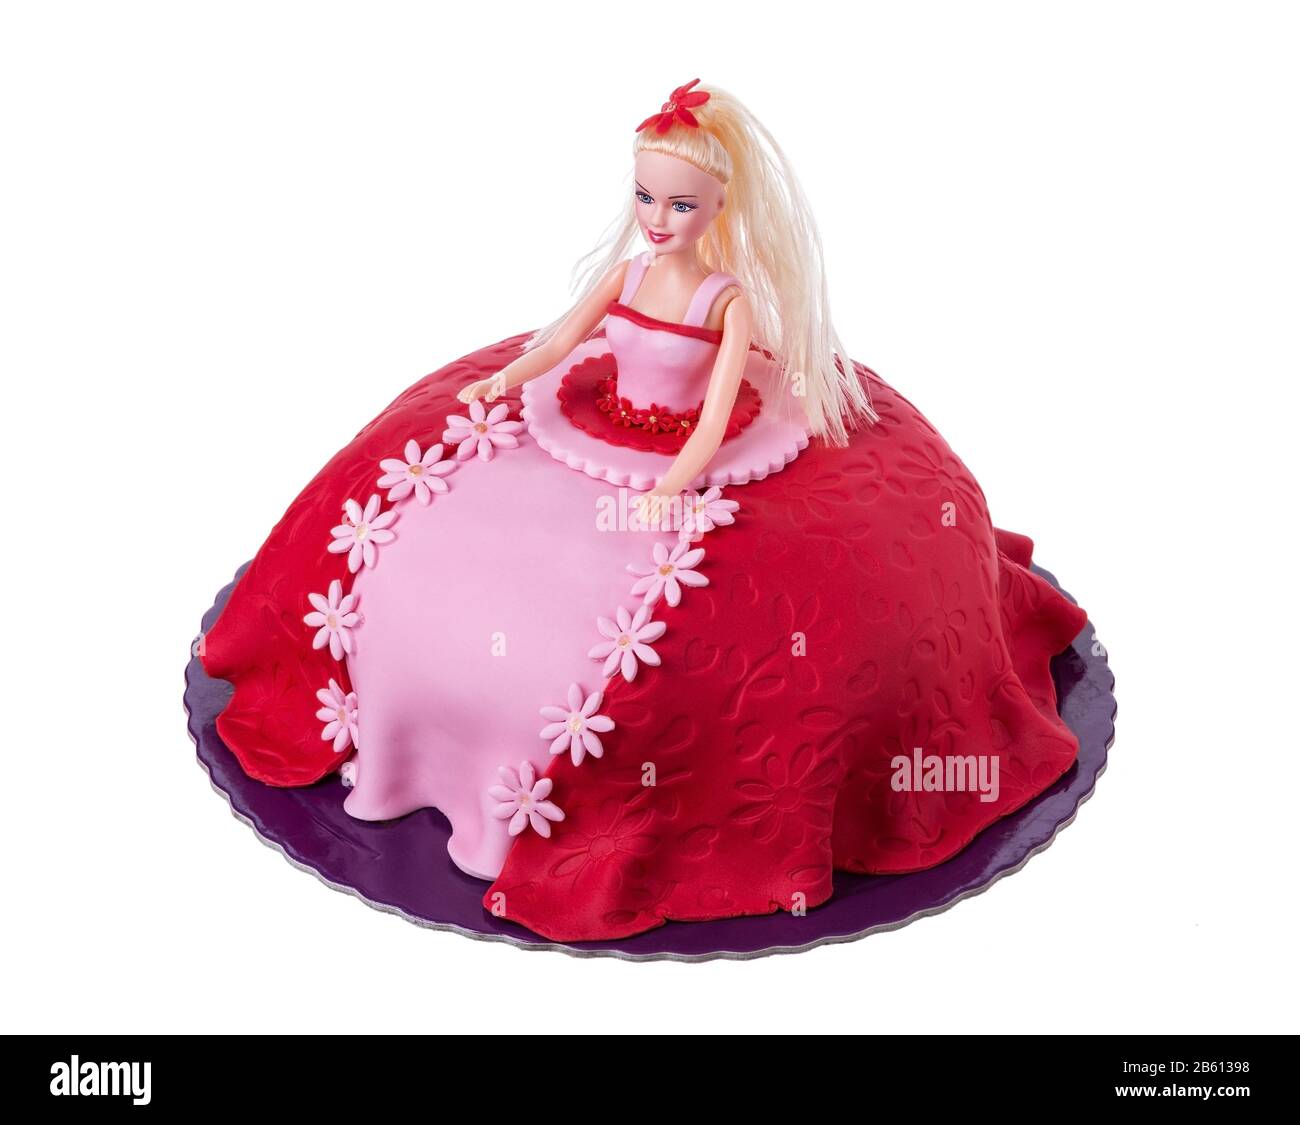 Torta Barbie per una piccola principessa